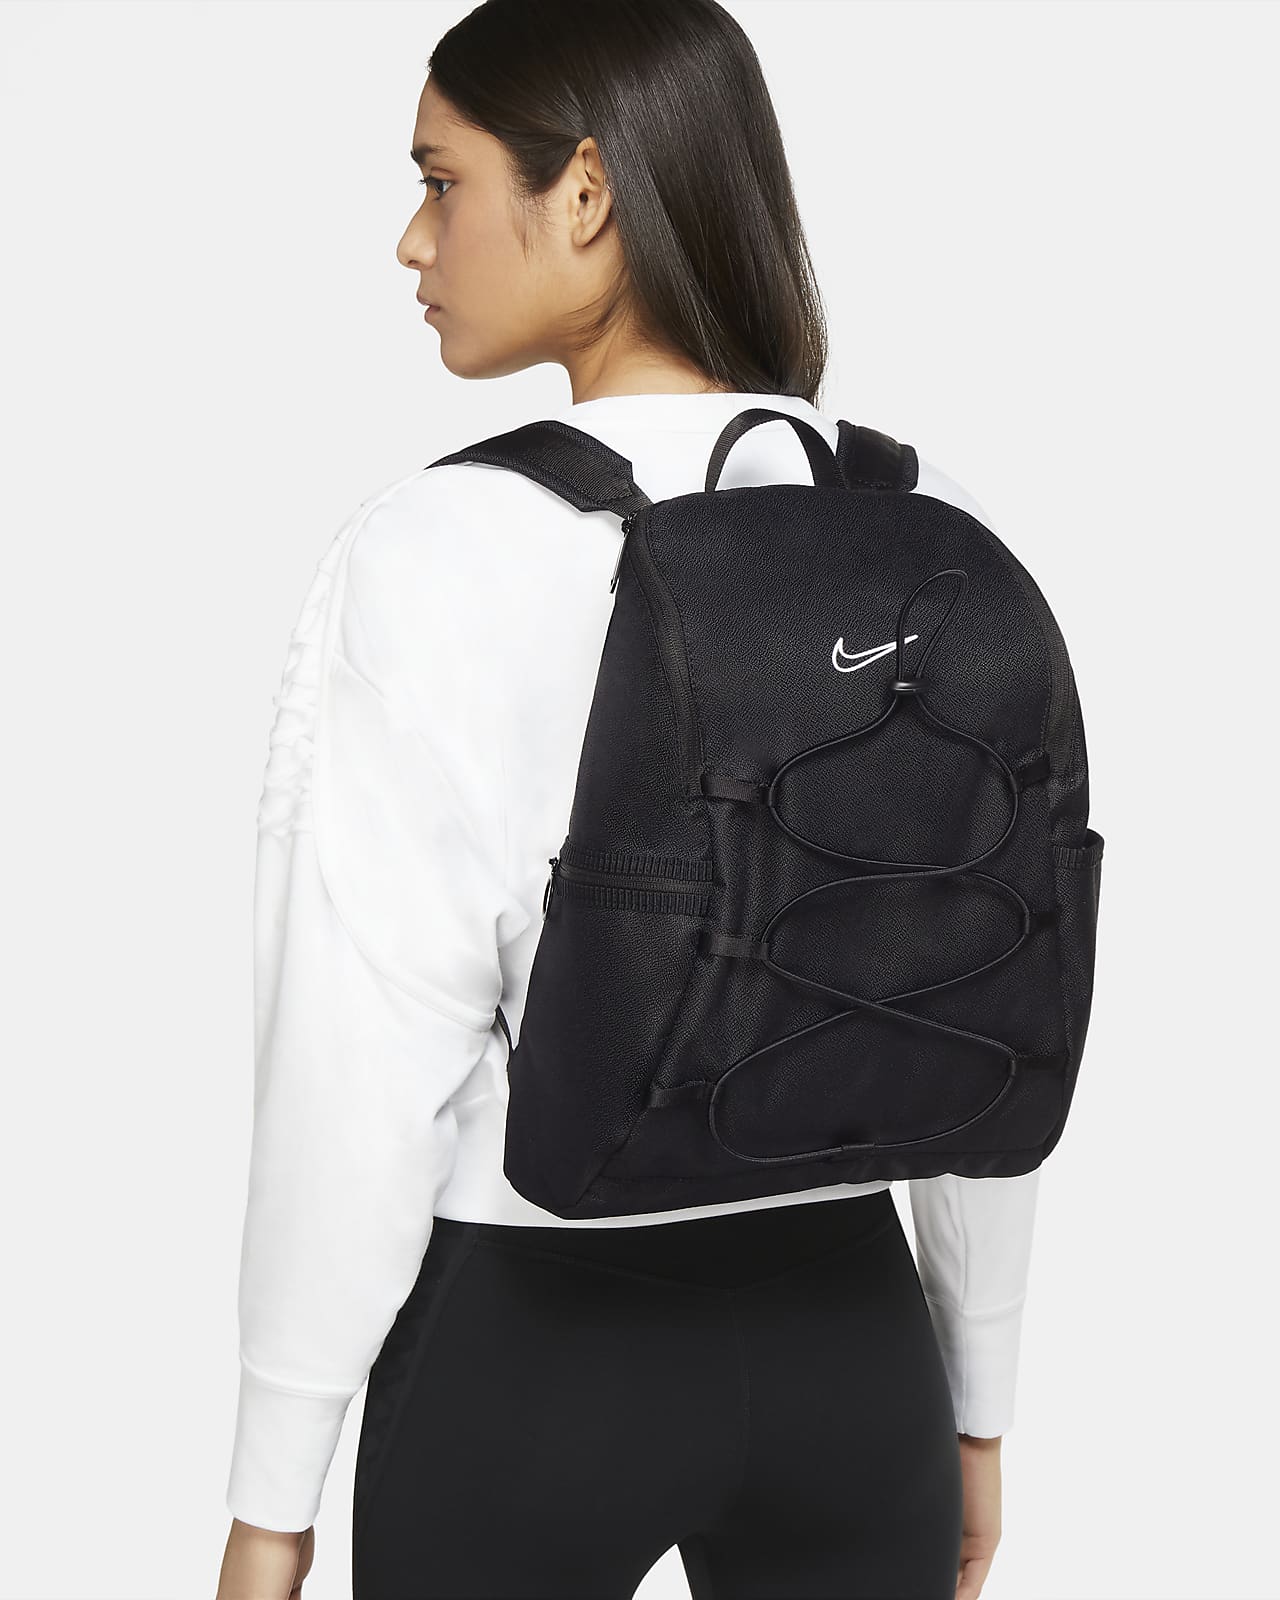 Damski plecak treningowy Nike One (16 l)